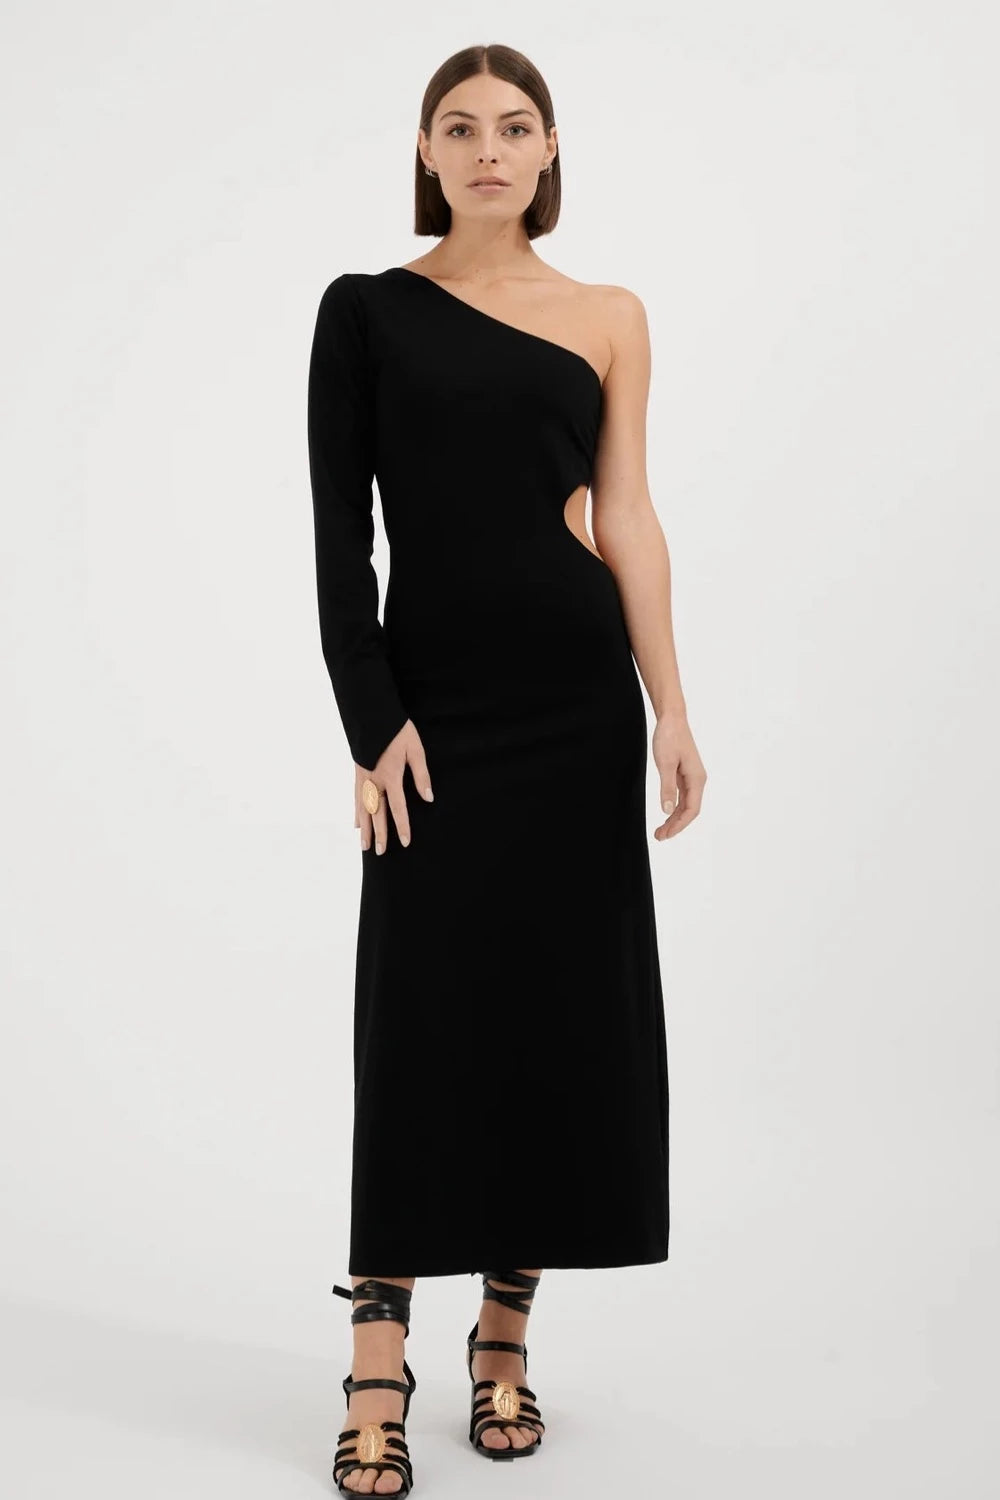 Fete Imperiale - Propriano Asymmetric Dress: Black